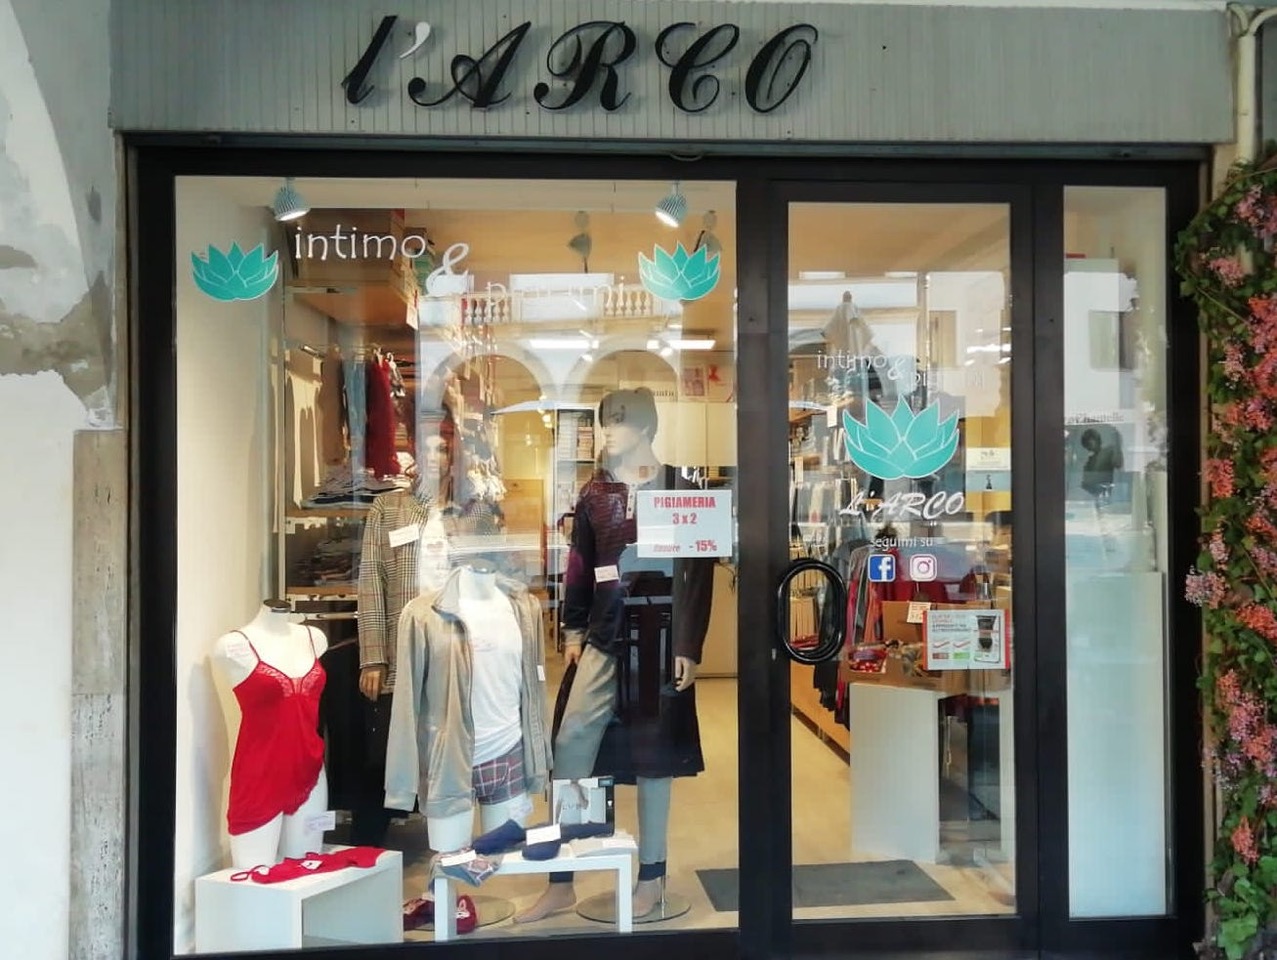 Retail Capital: nuovo negozio Unyli a Rovigo